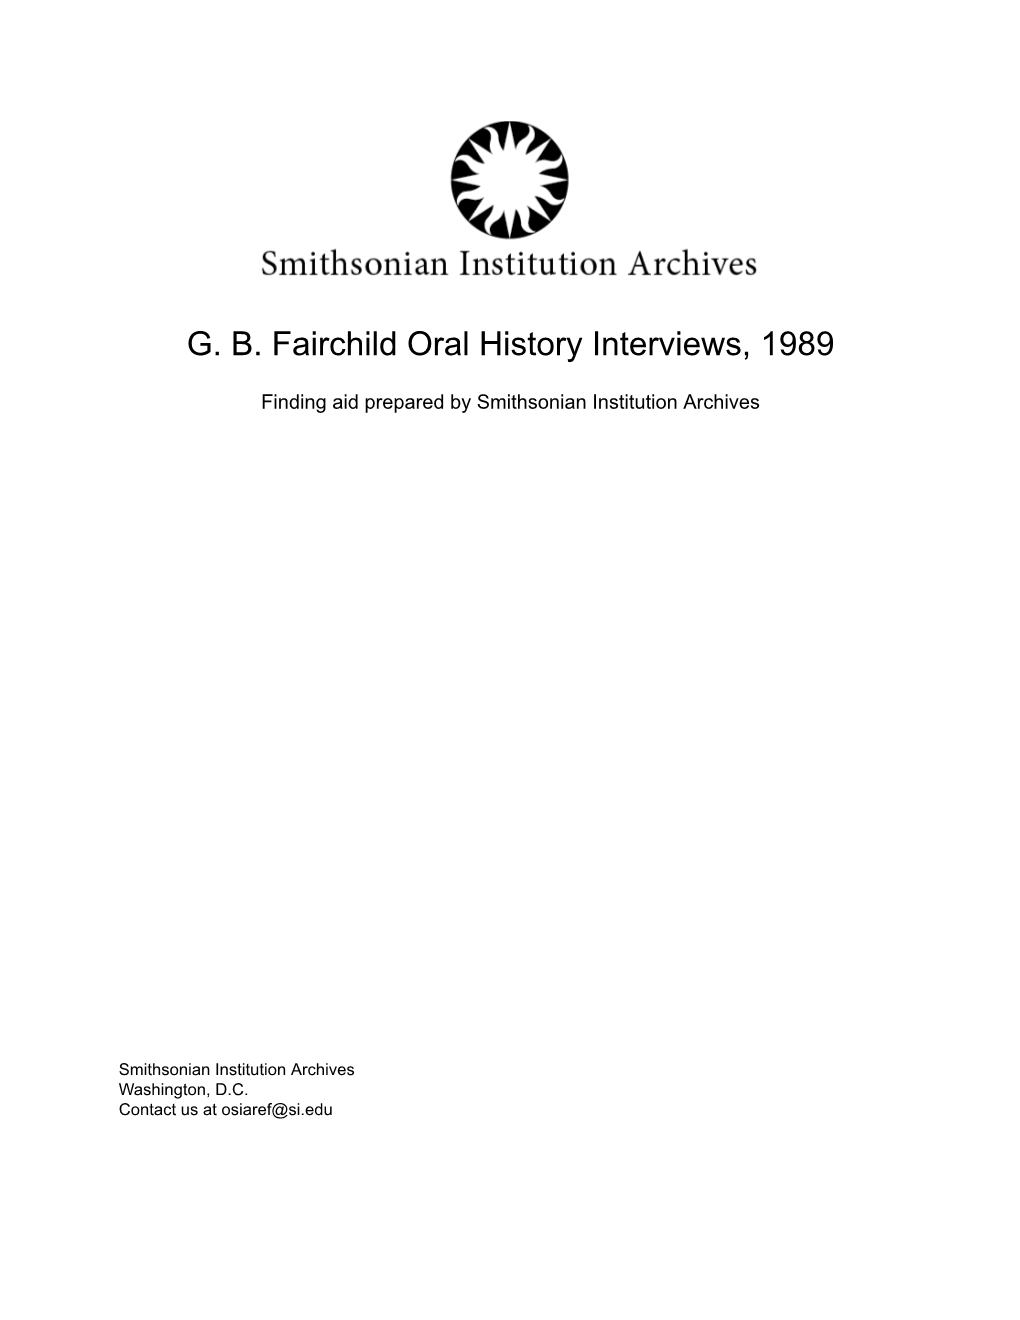 GB Fairchild Oral History Interviews, 1989